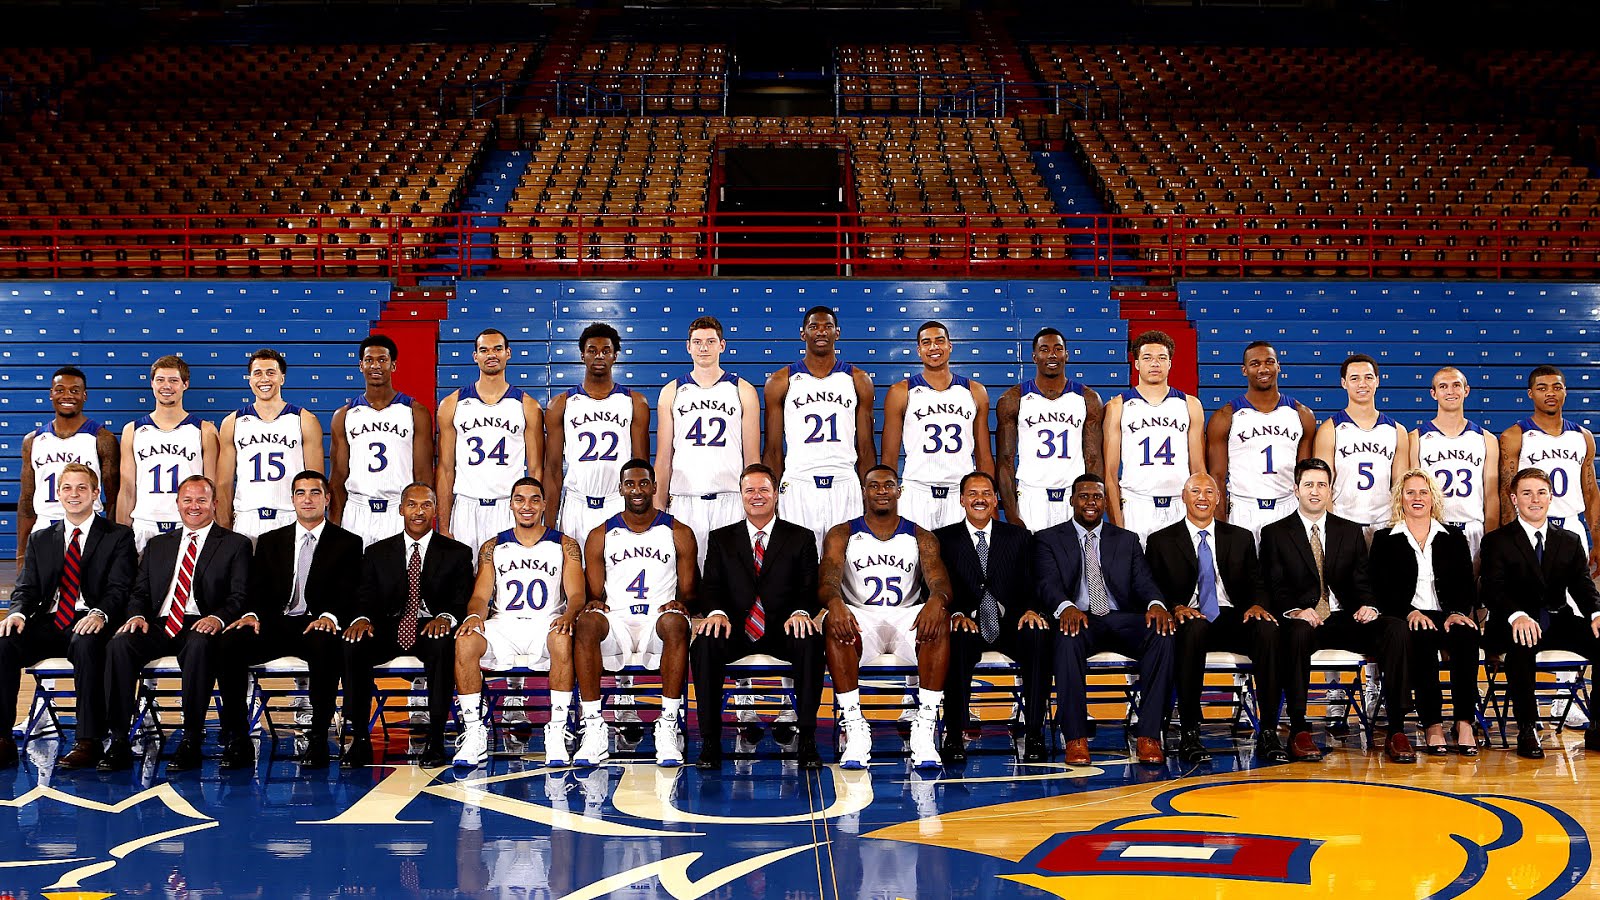 2014-15 Kansas Jayhawks men's basketball team - Basketball Choices1600 x 900